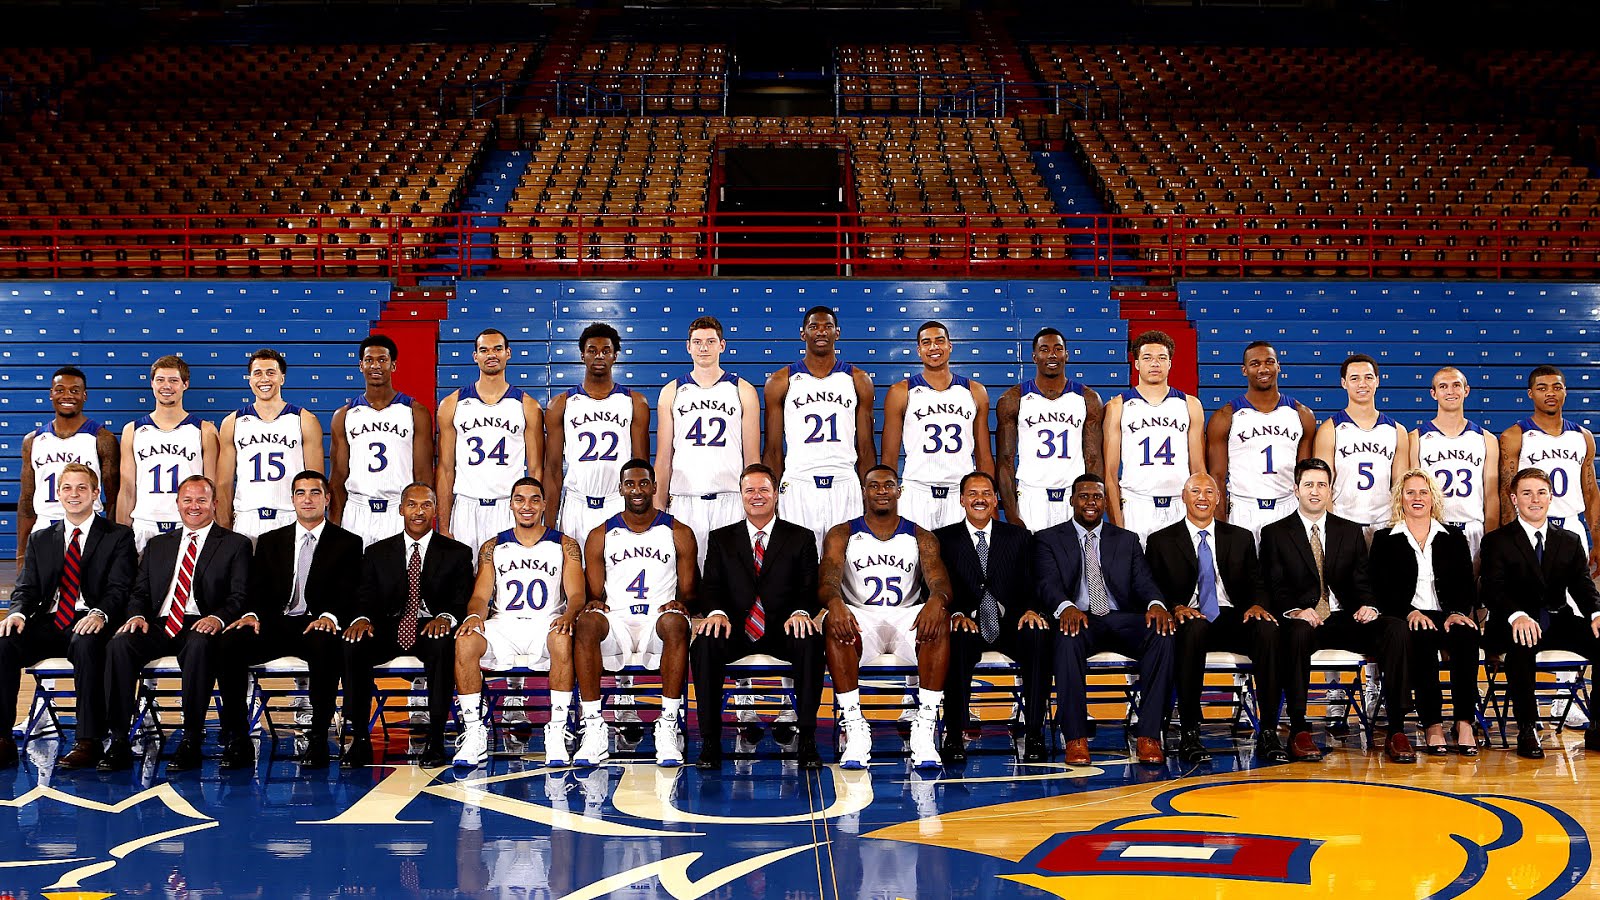 2014-15 Kansas Jayhawks men's basketball team - Basketball Choices1600 x 900